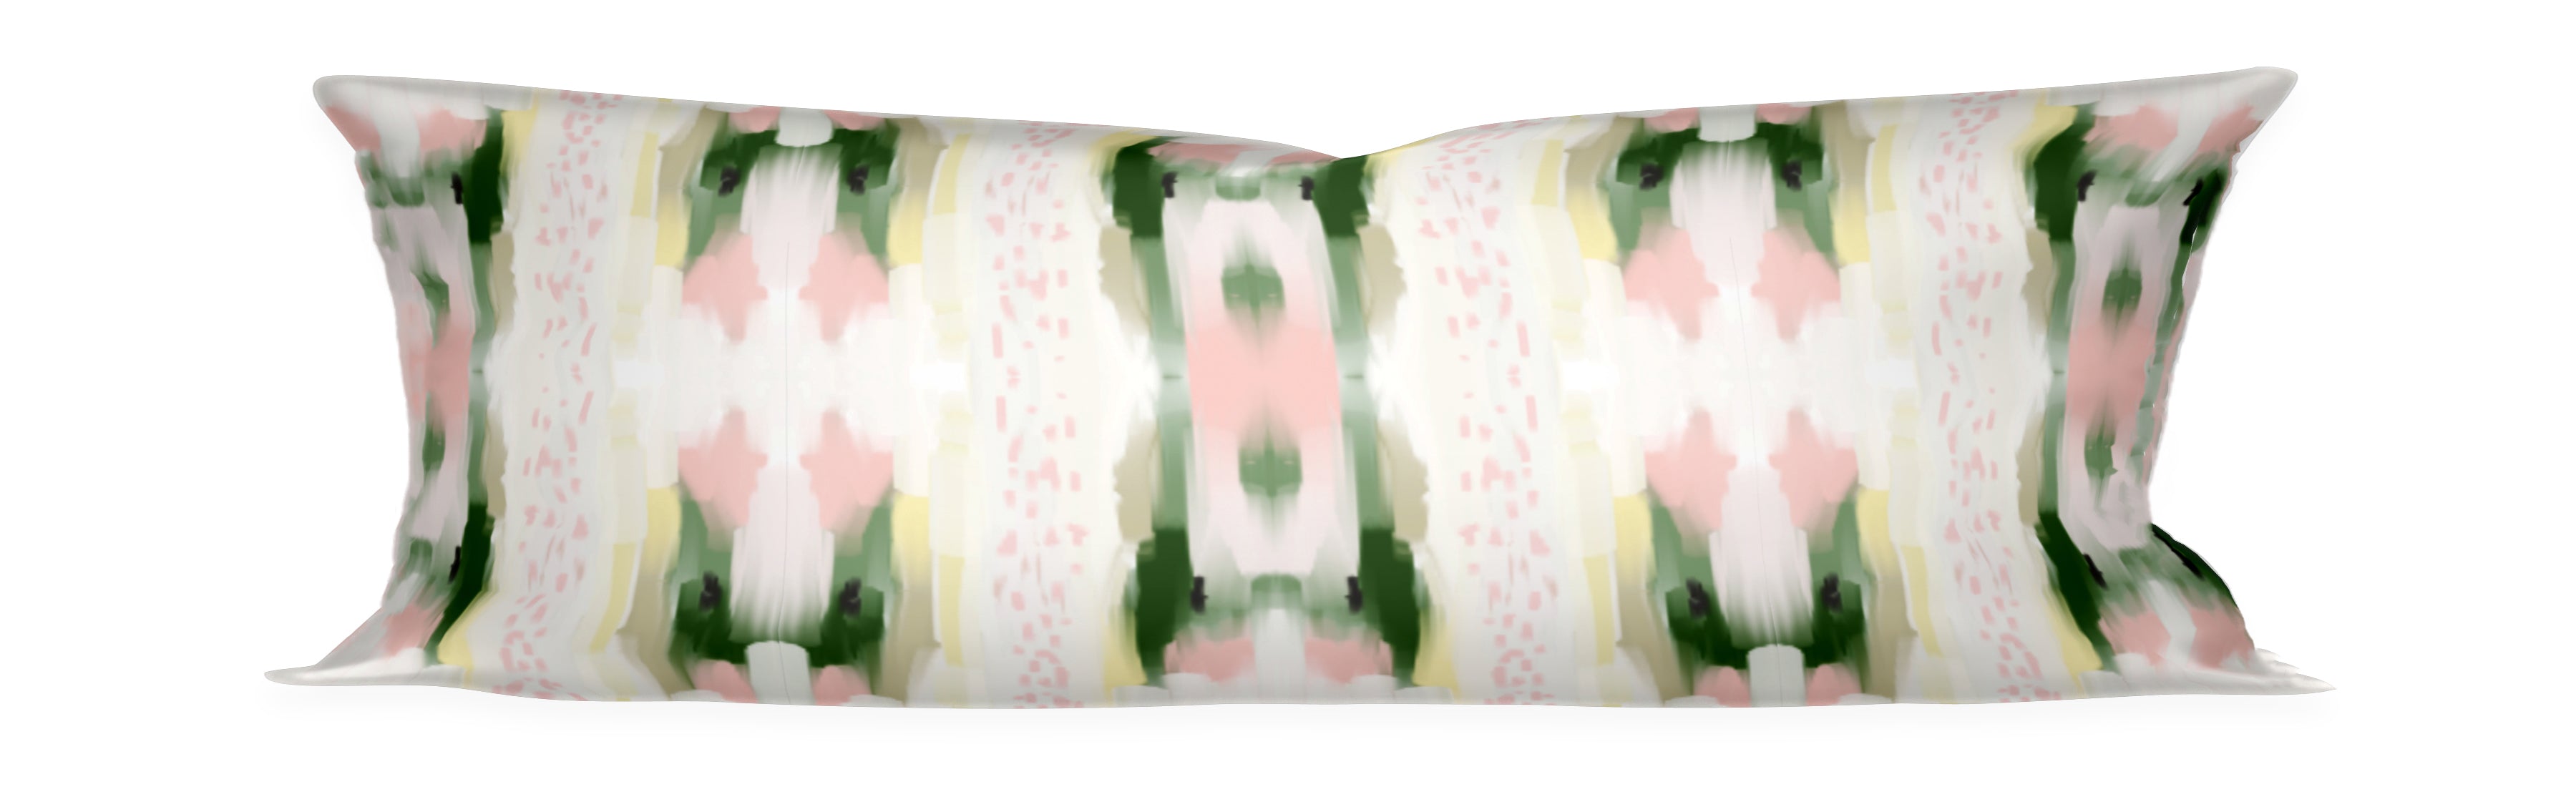 charleston artist decor, artist pillows, art pillows, green and pink lumbar pillow, green and pink bolster